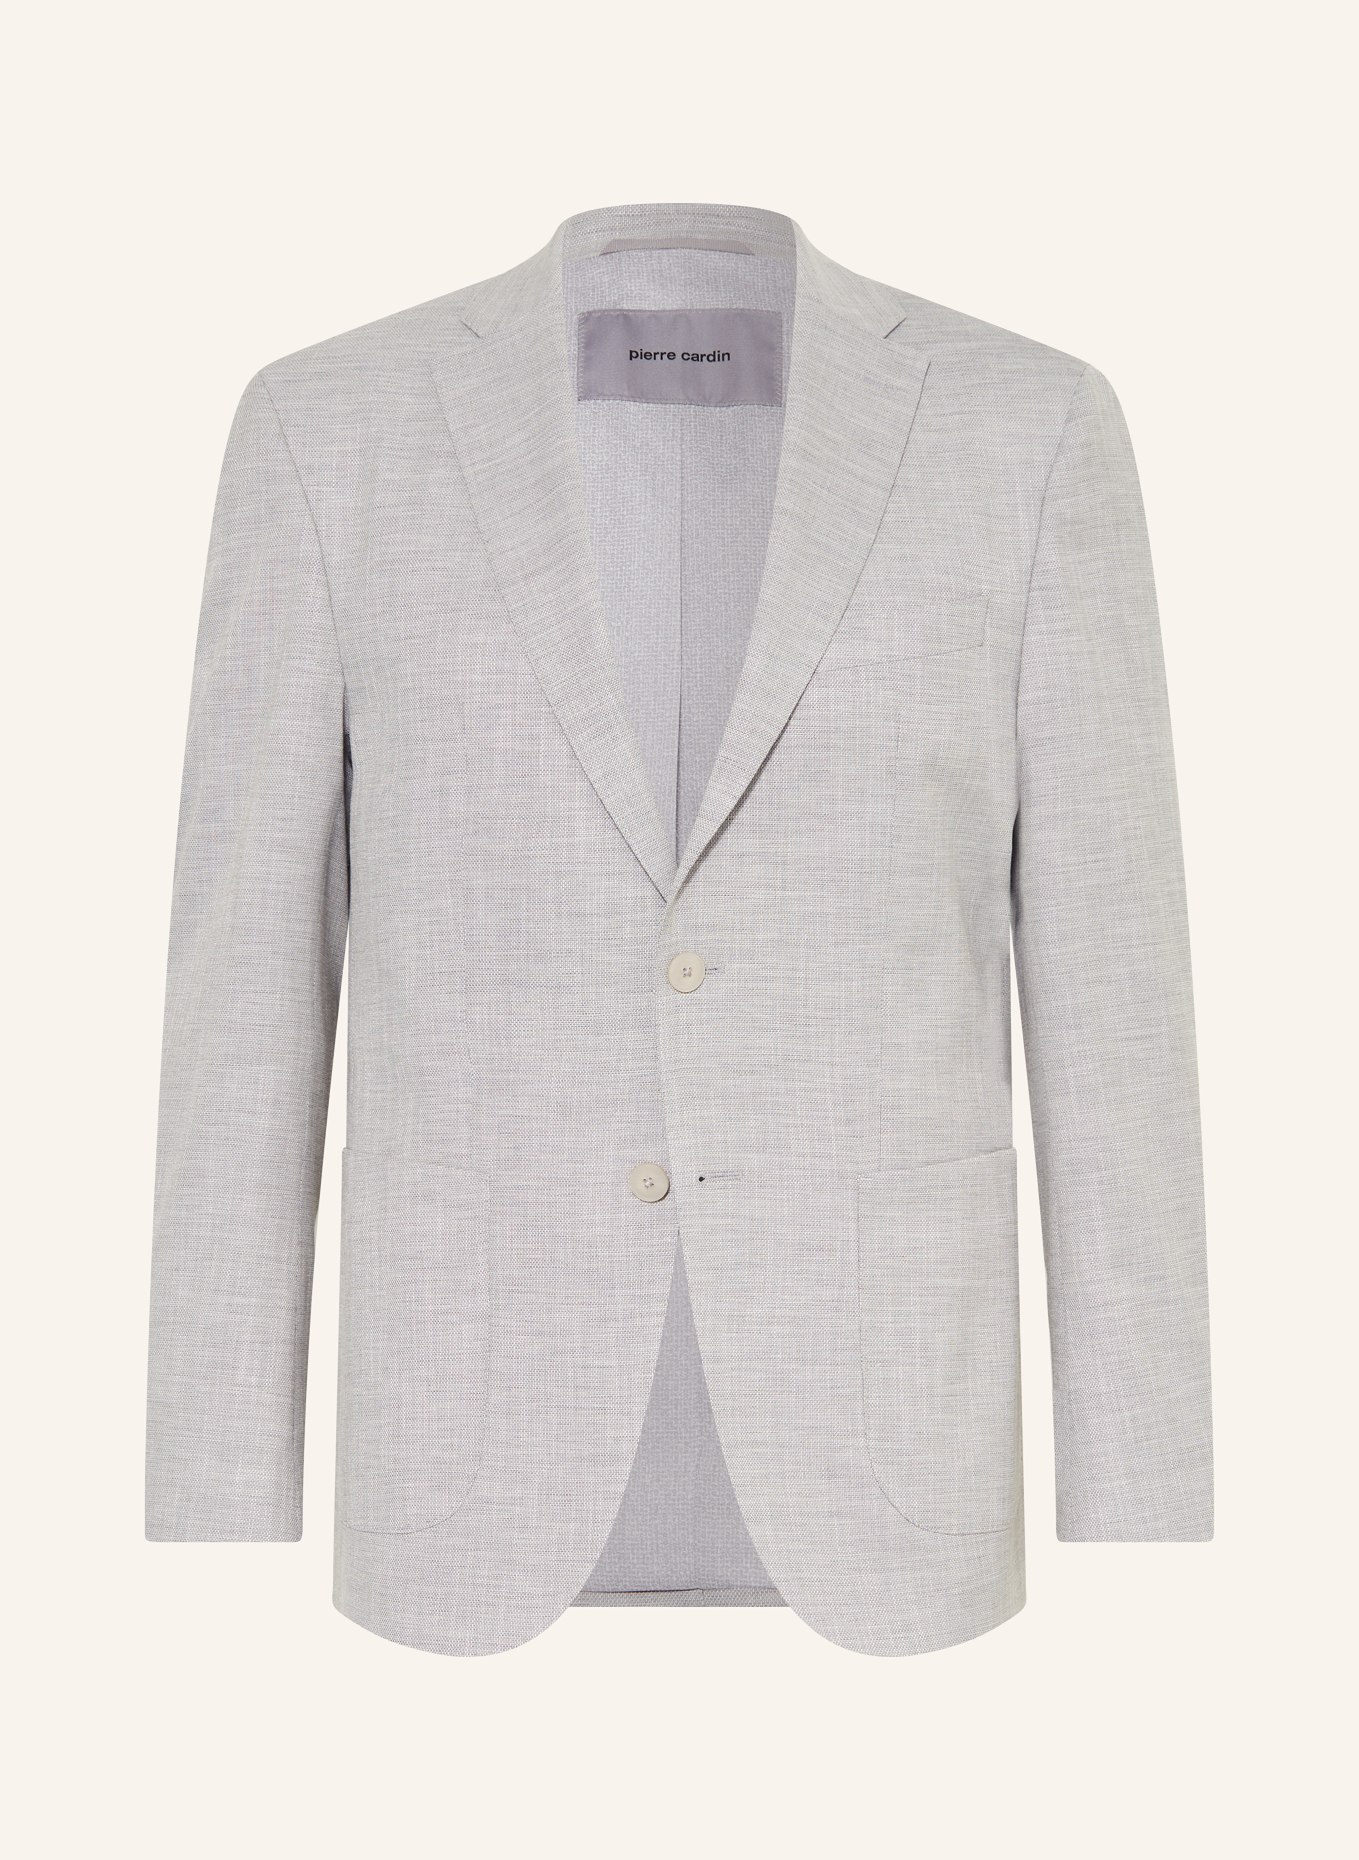 pierre cardin Suit jacket MICHEL regular fit, Color: LIGHT GRAY (Image 1)